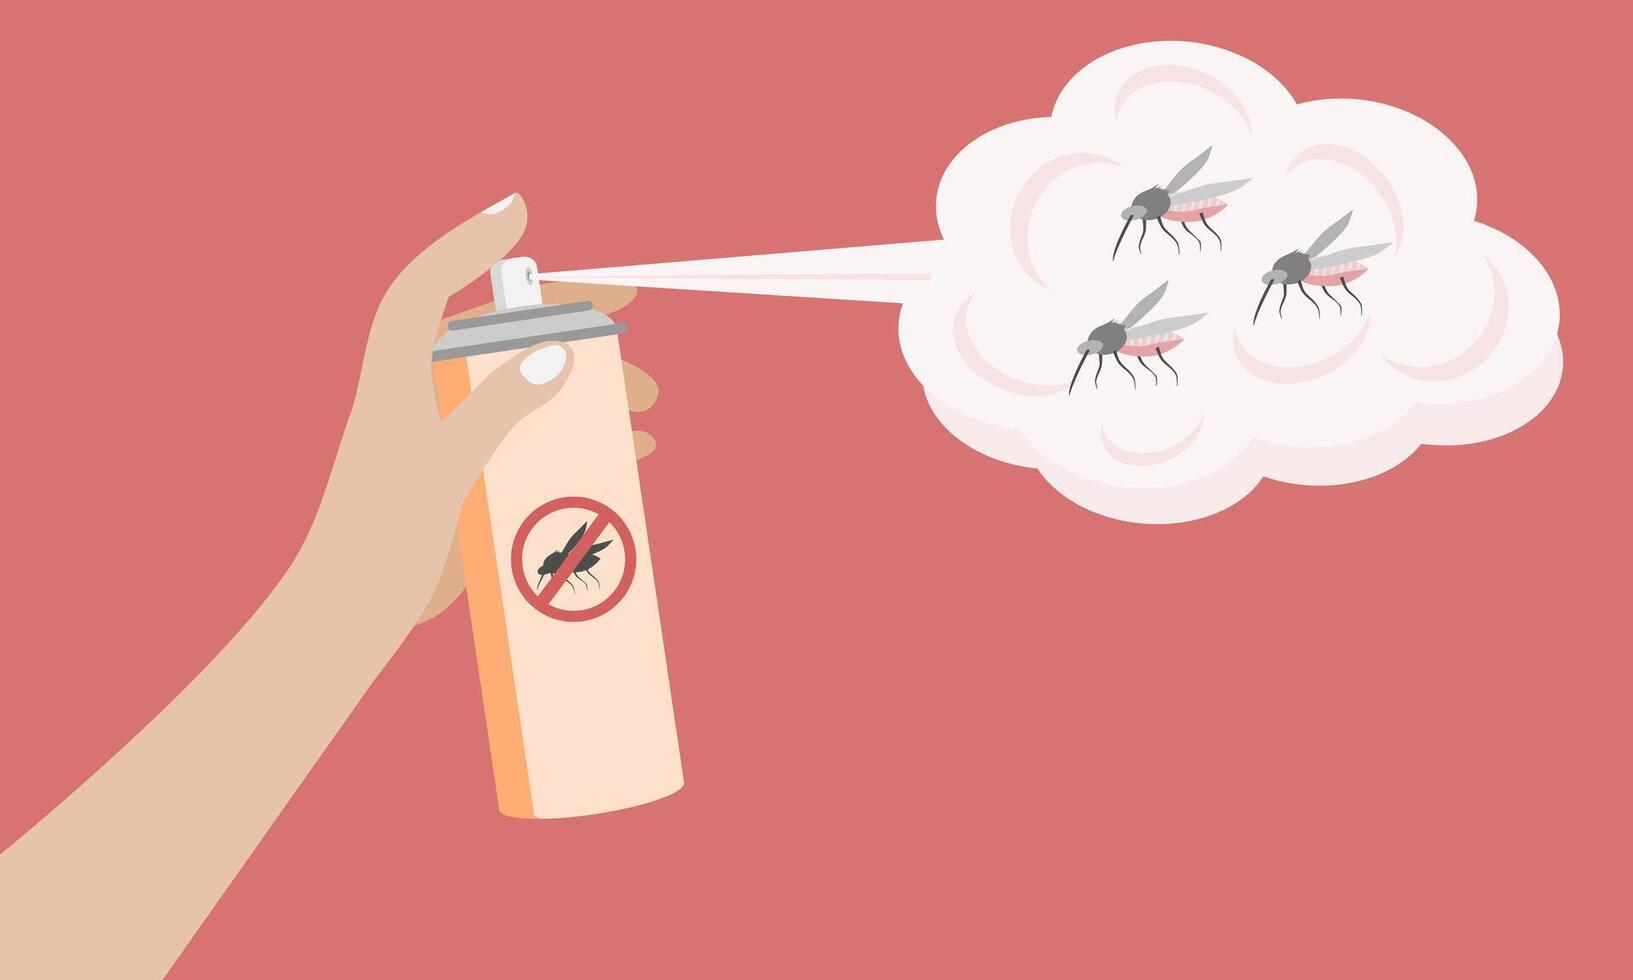 mano participación mosquito repelente rociar. dengue fiebre o malaria brote concepto. vector ilustración.